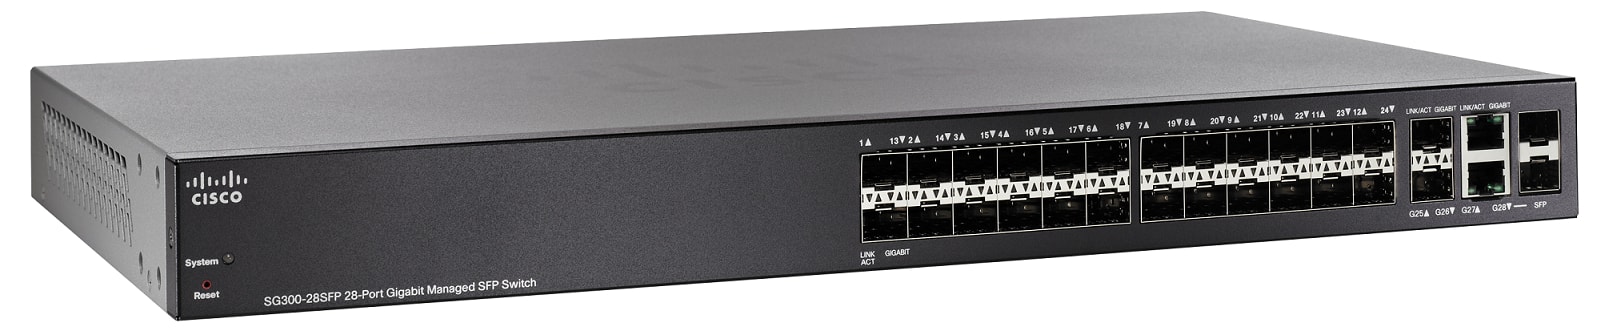 Cisco SG300-28SFP 28-portGigabit SFP Managed Switch Refrsh